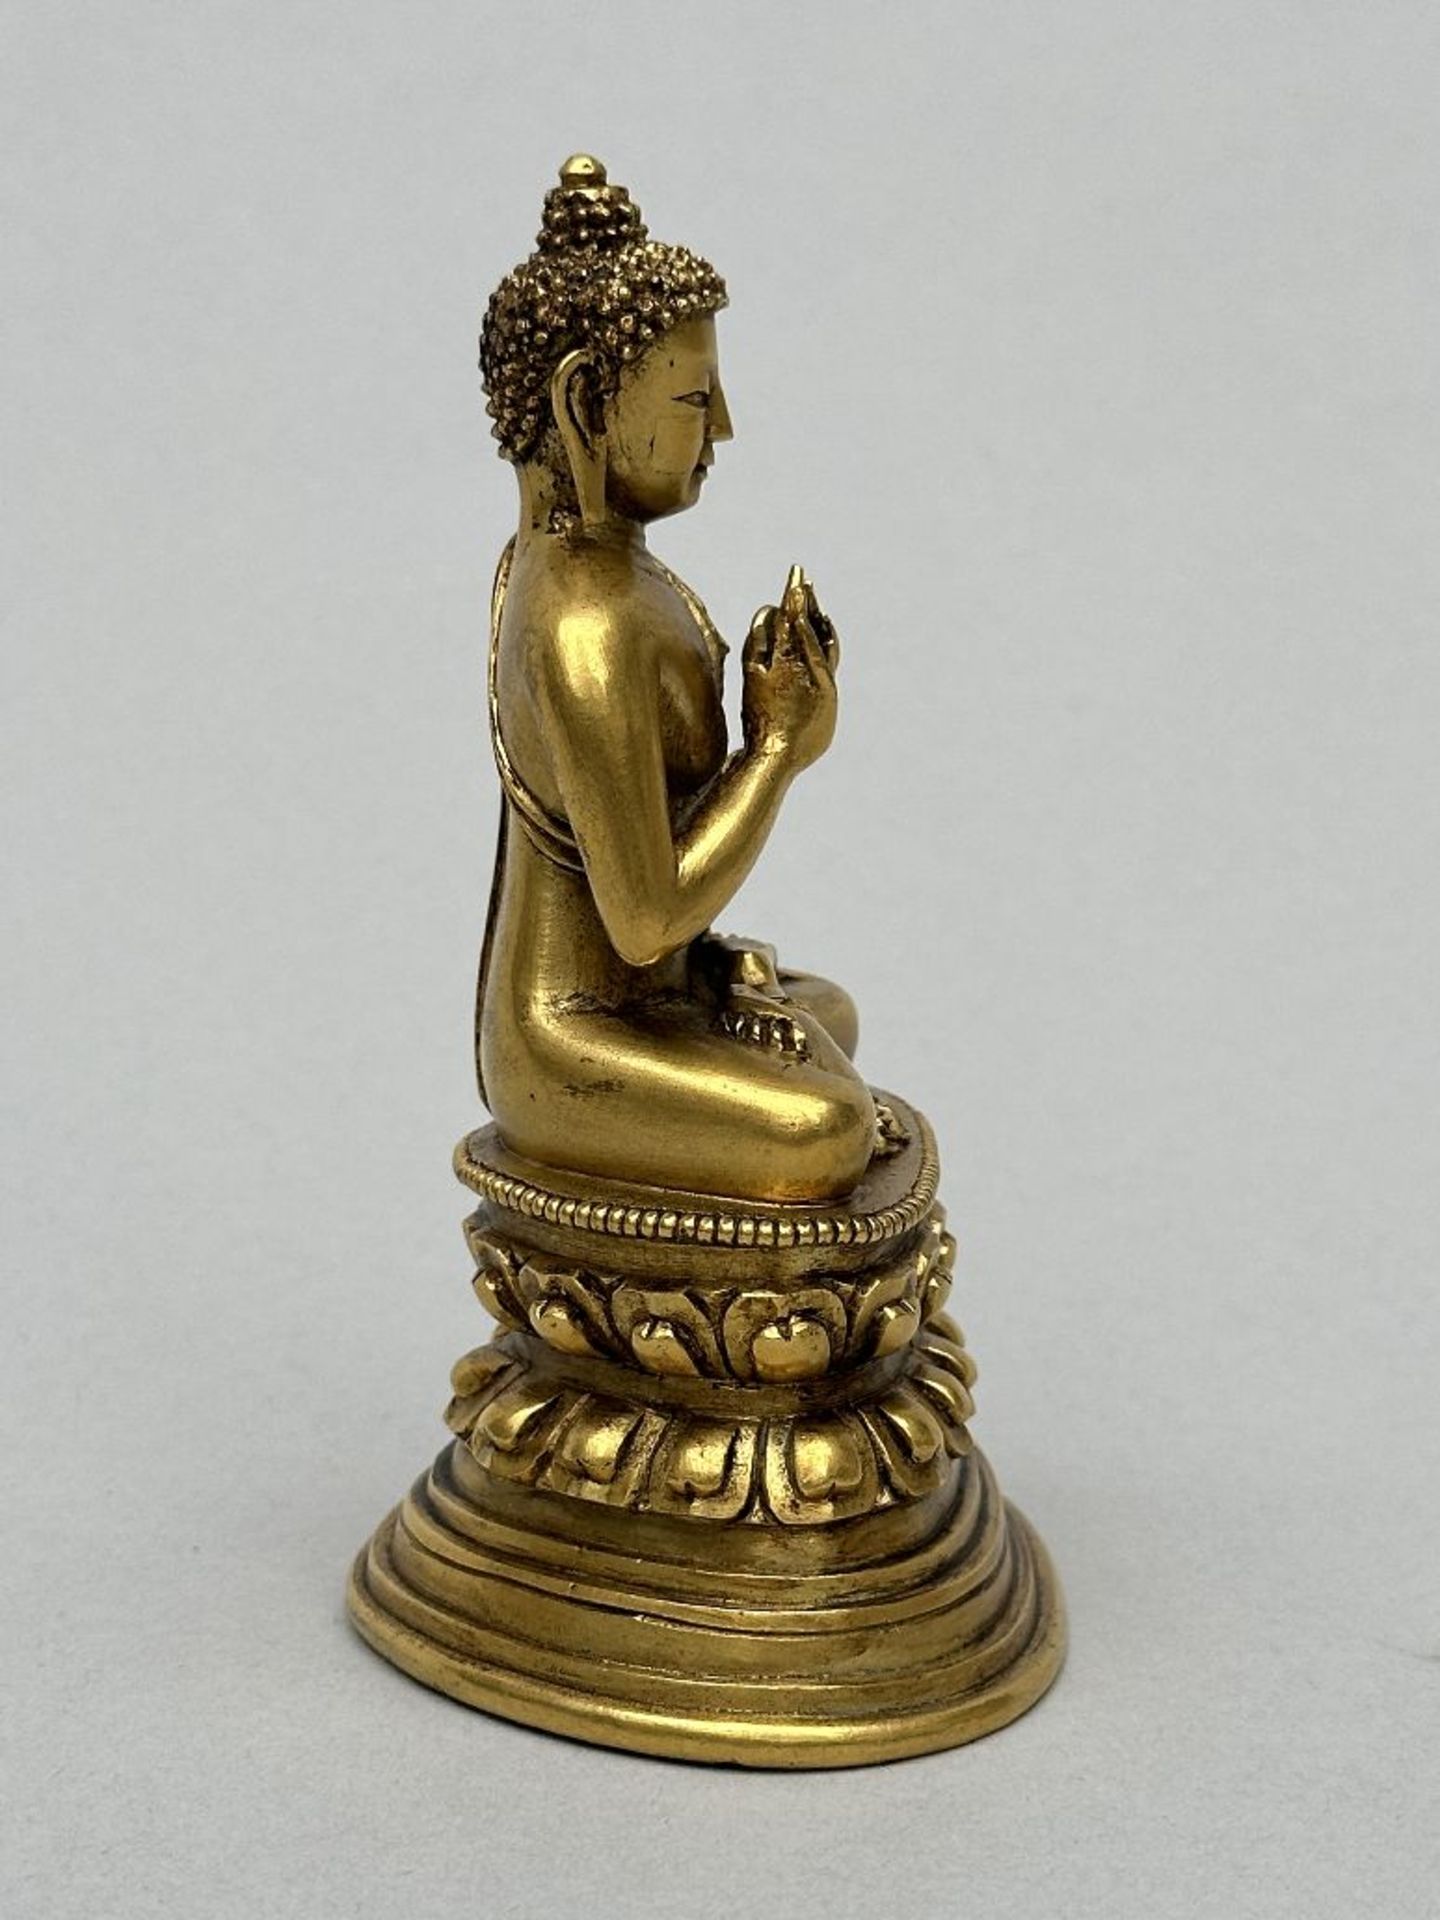 A bronze statue 'Buddha', China 18th century - Image 8 of 9